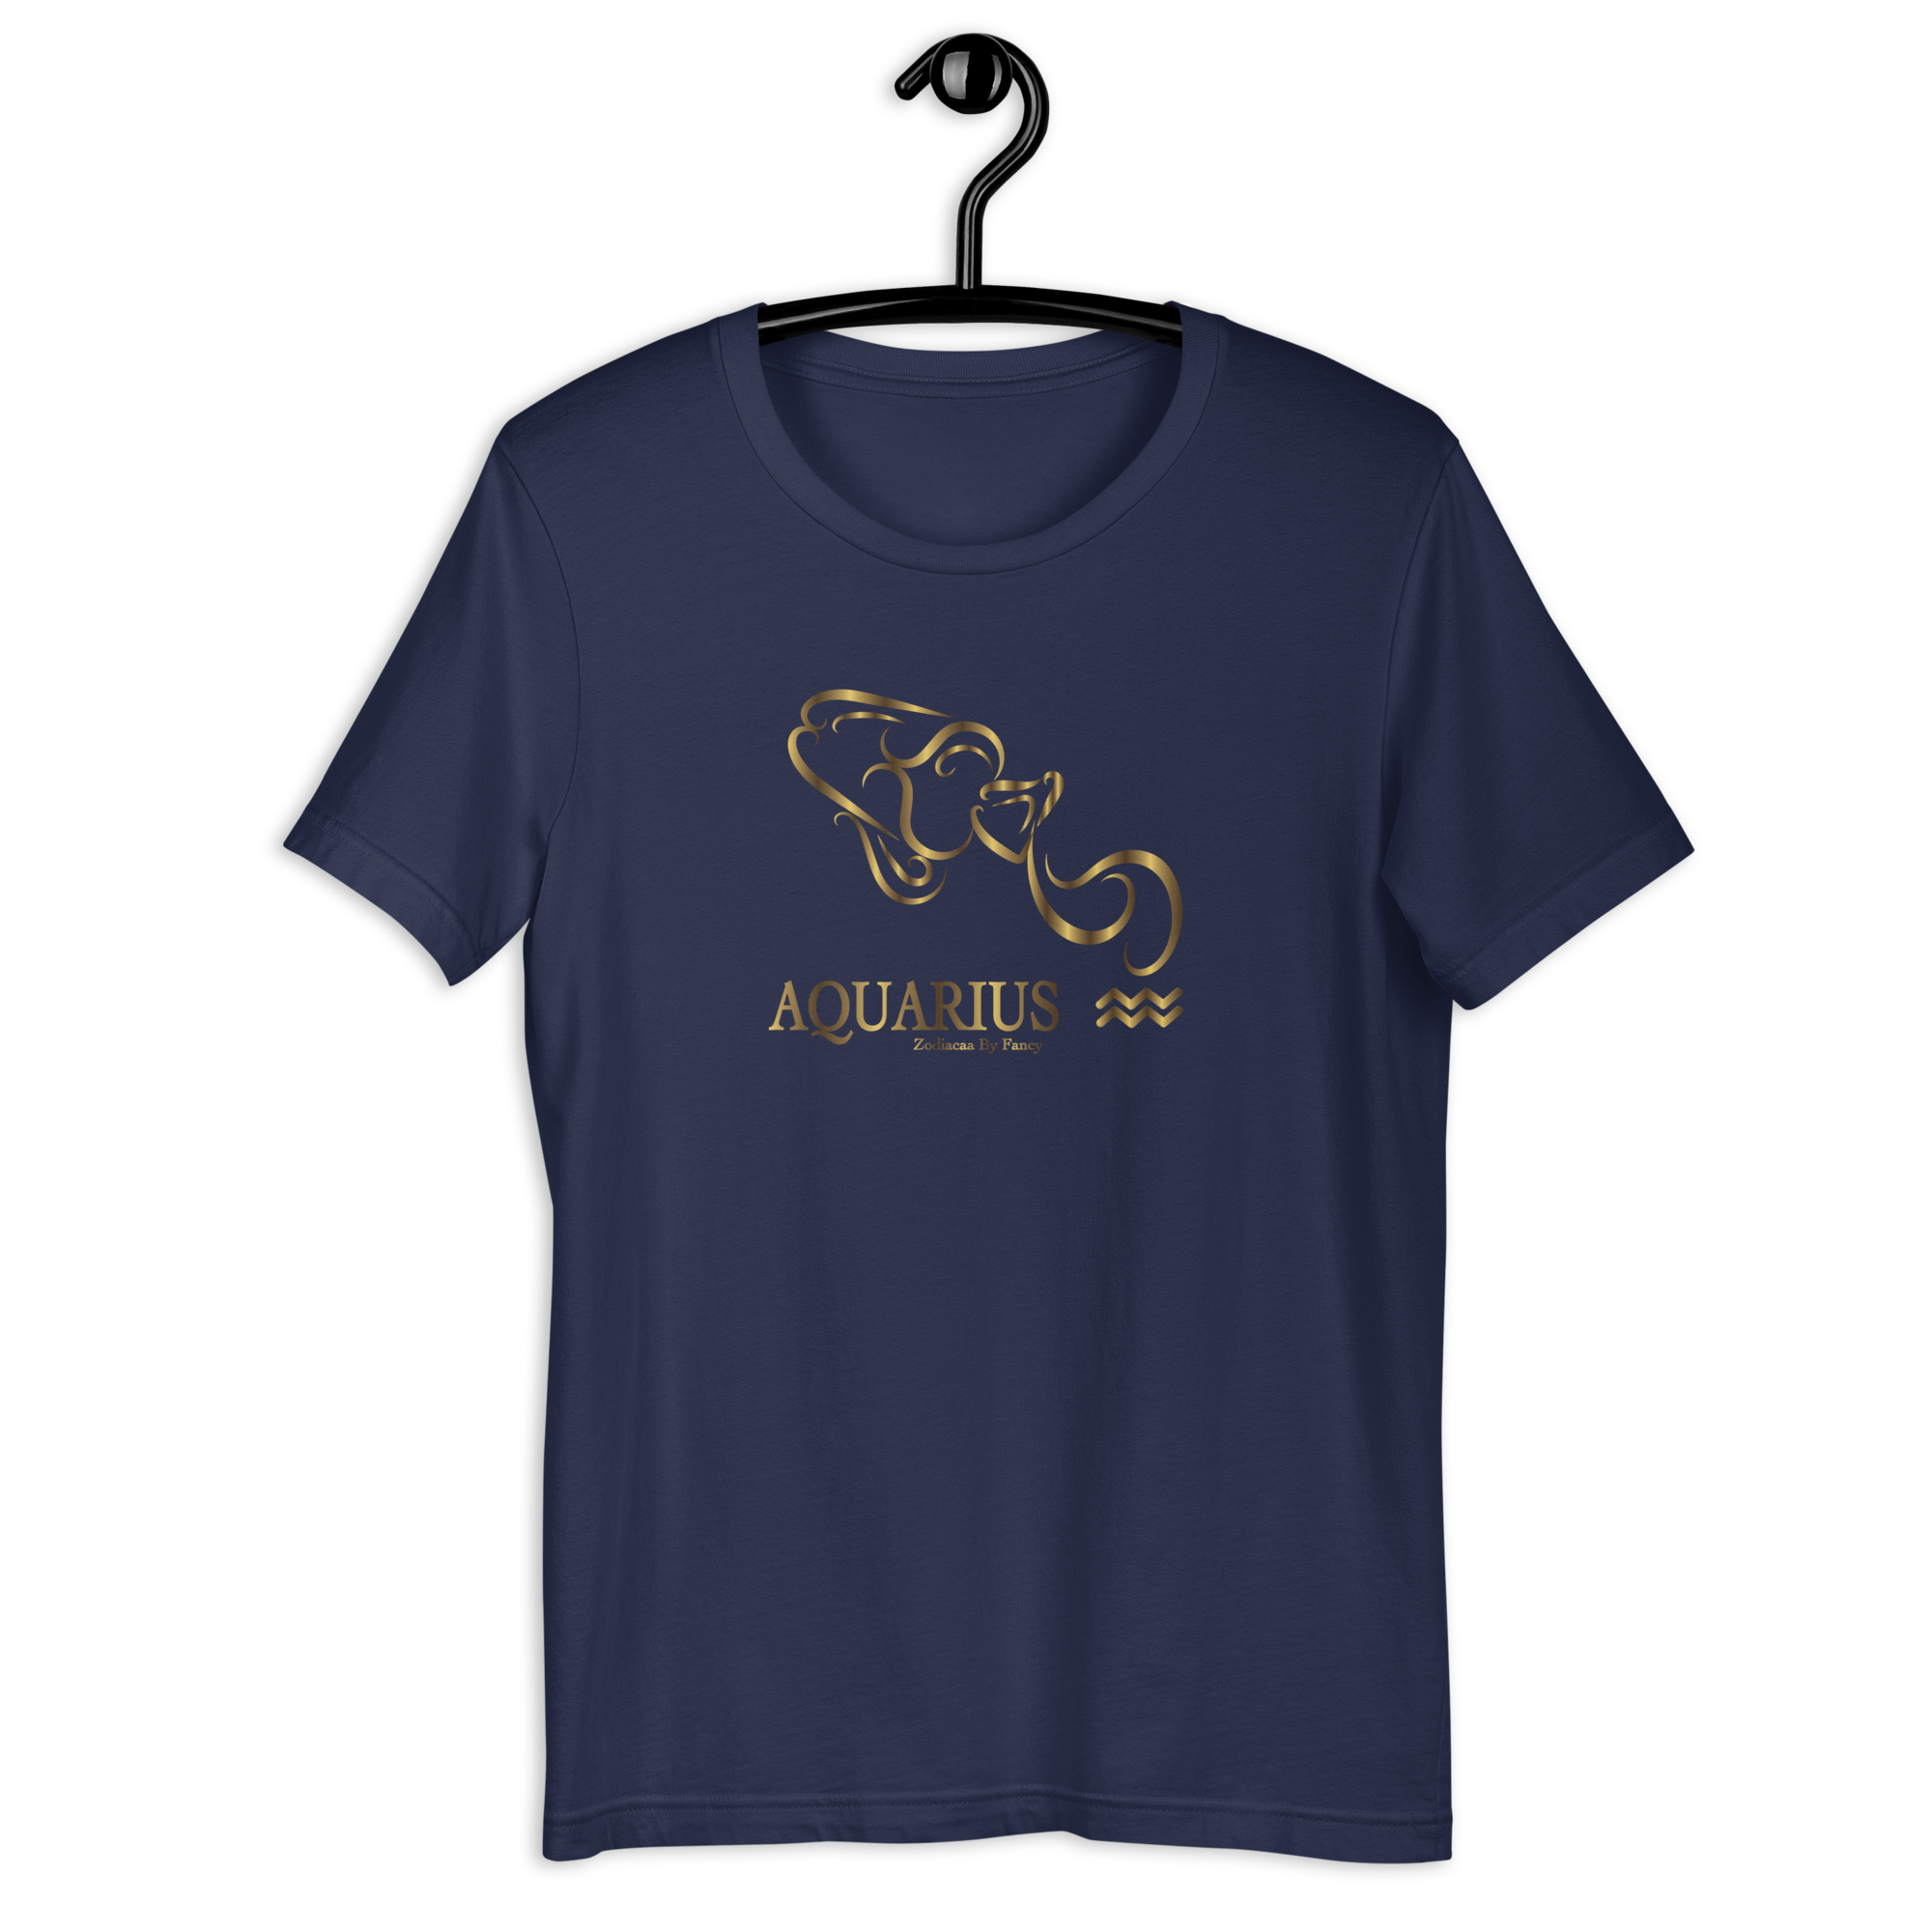 Aquarius golden T-Shirt